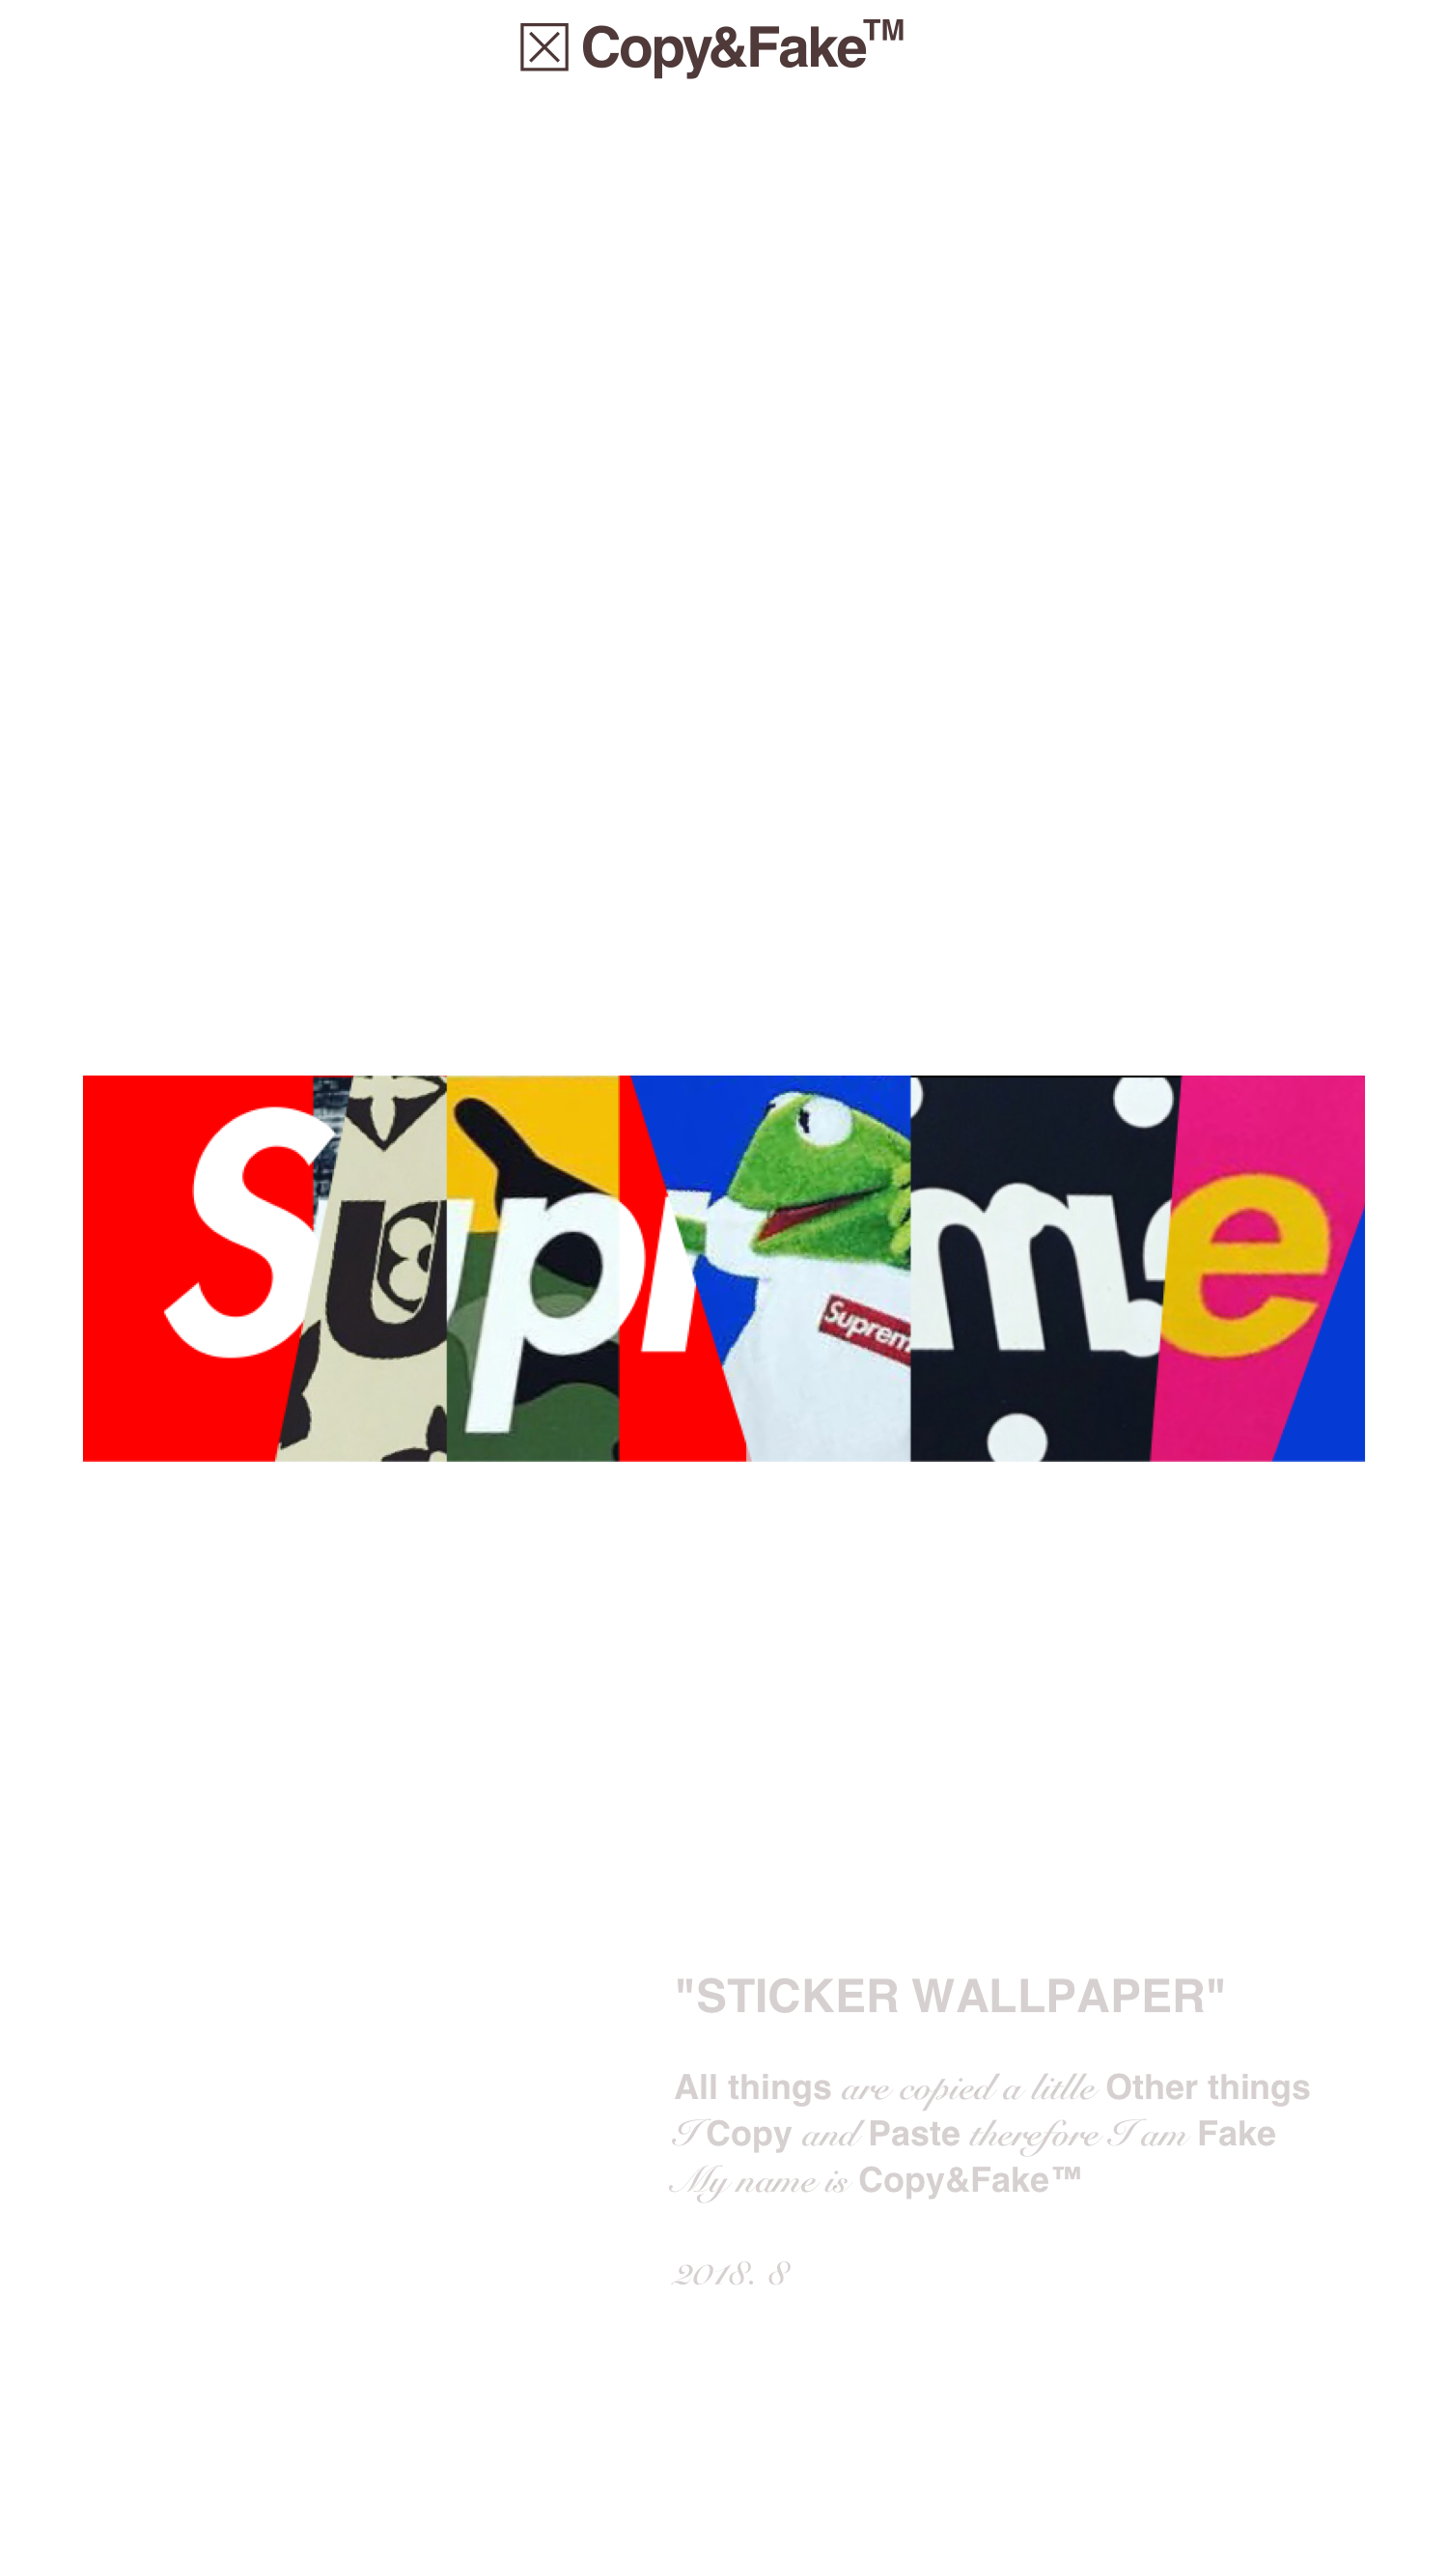 Supreme Logo Wallpapers - Wallpaper Cave